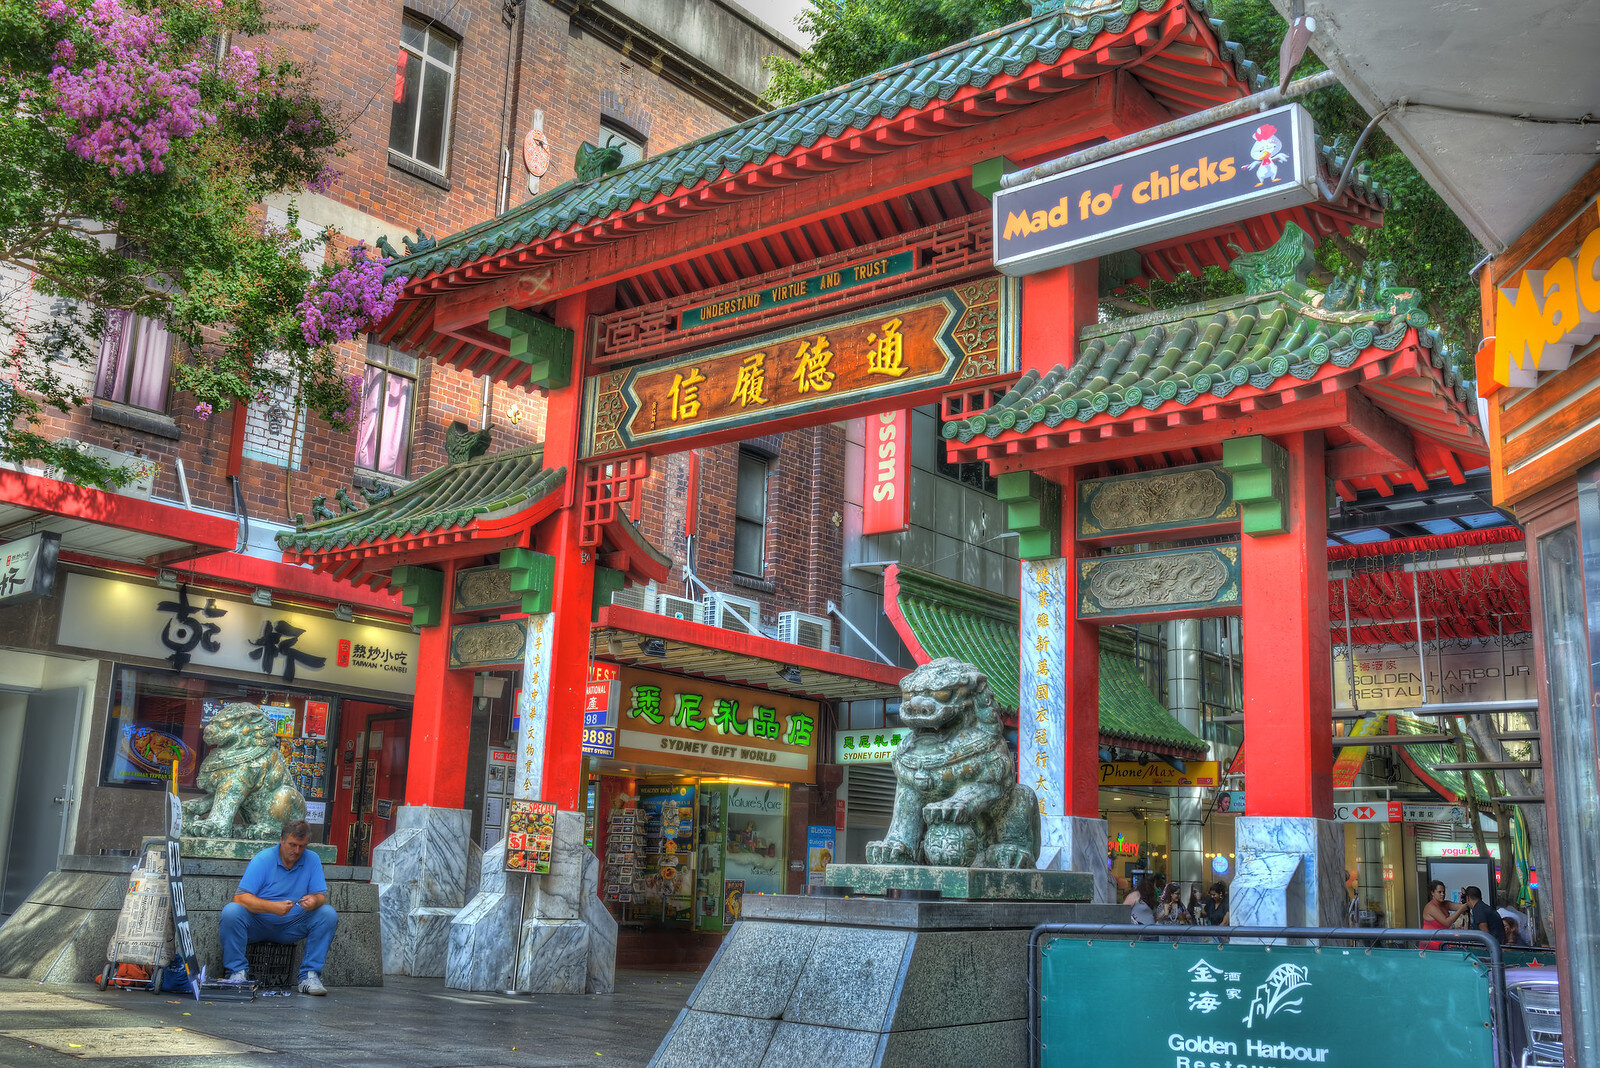 CATALYST - Explore 4 Chinatowns from Around the World